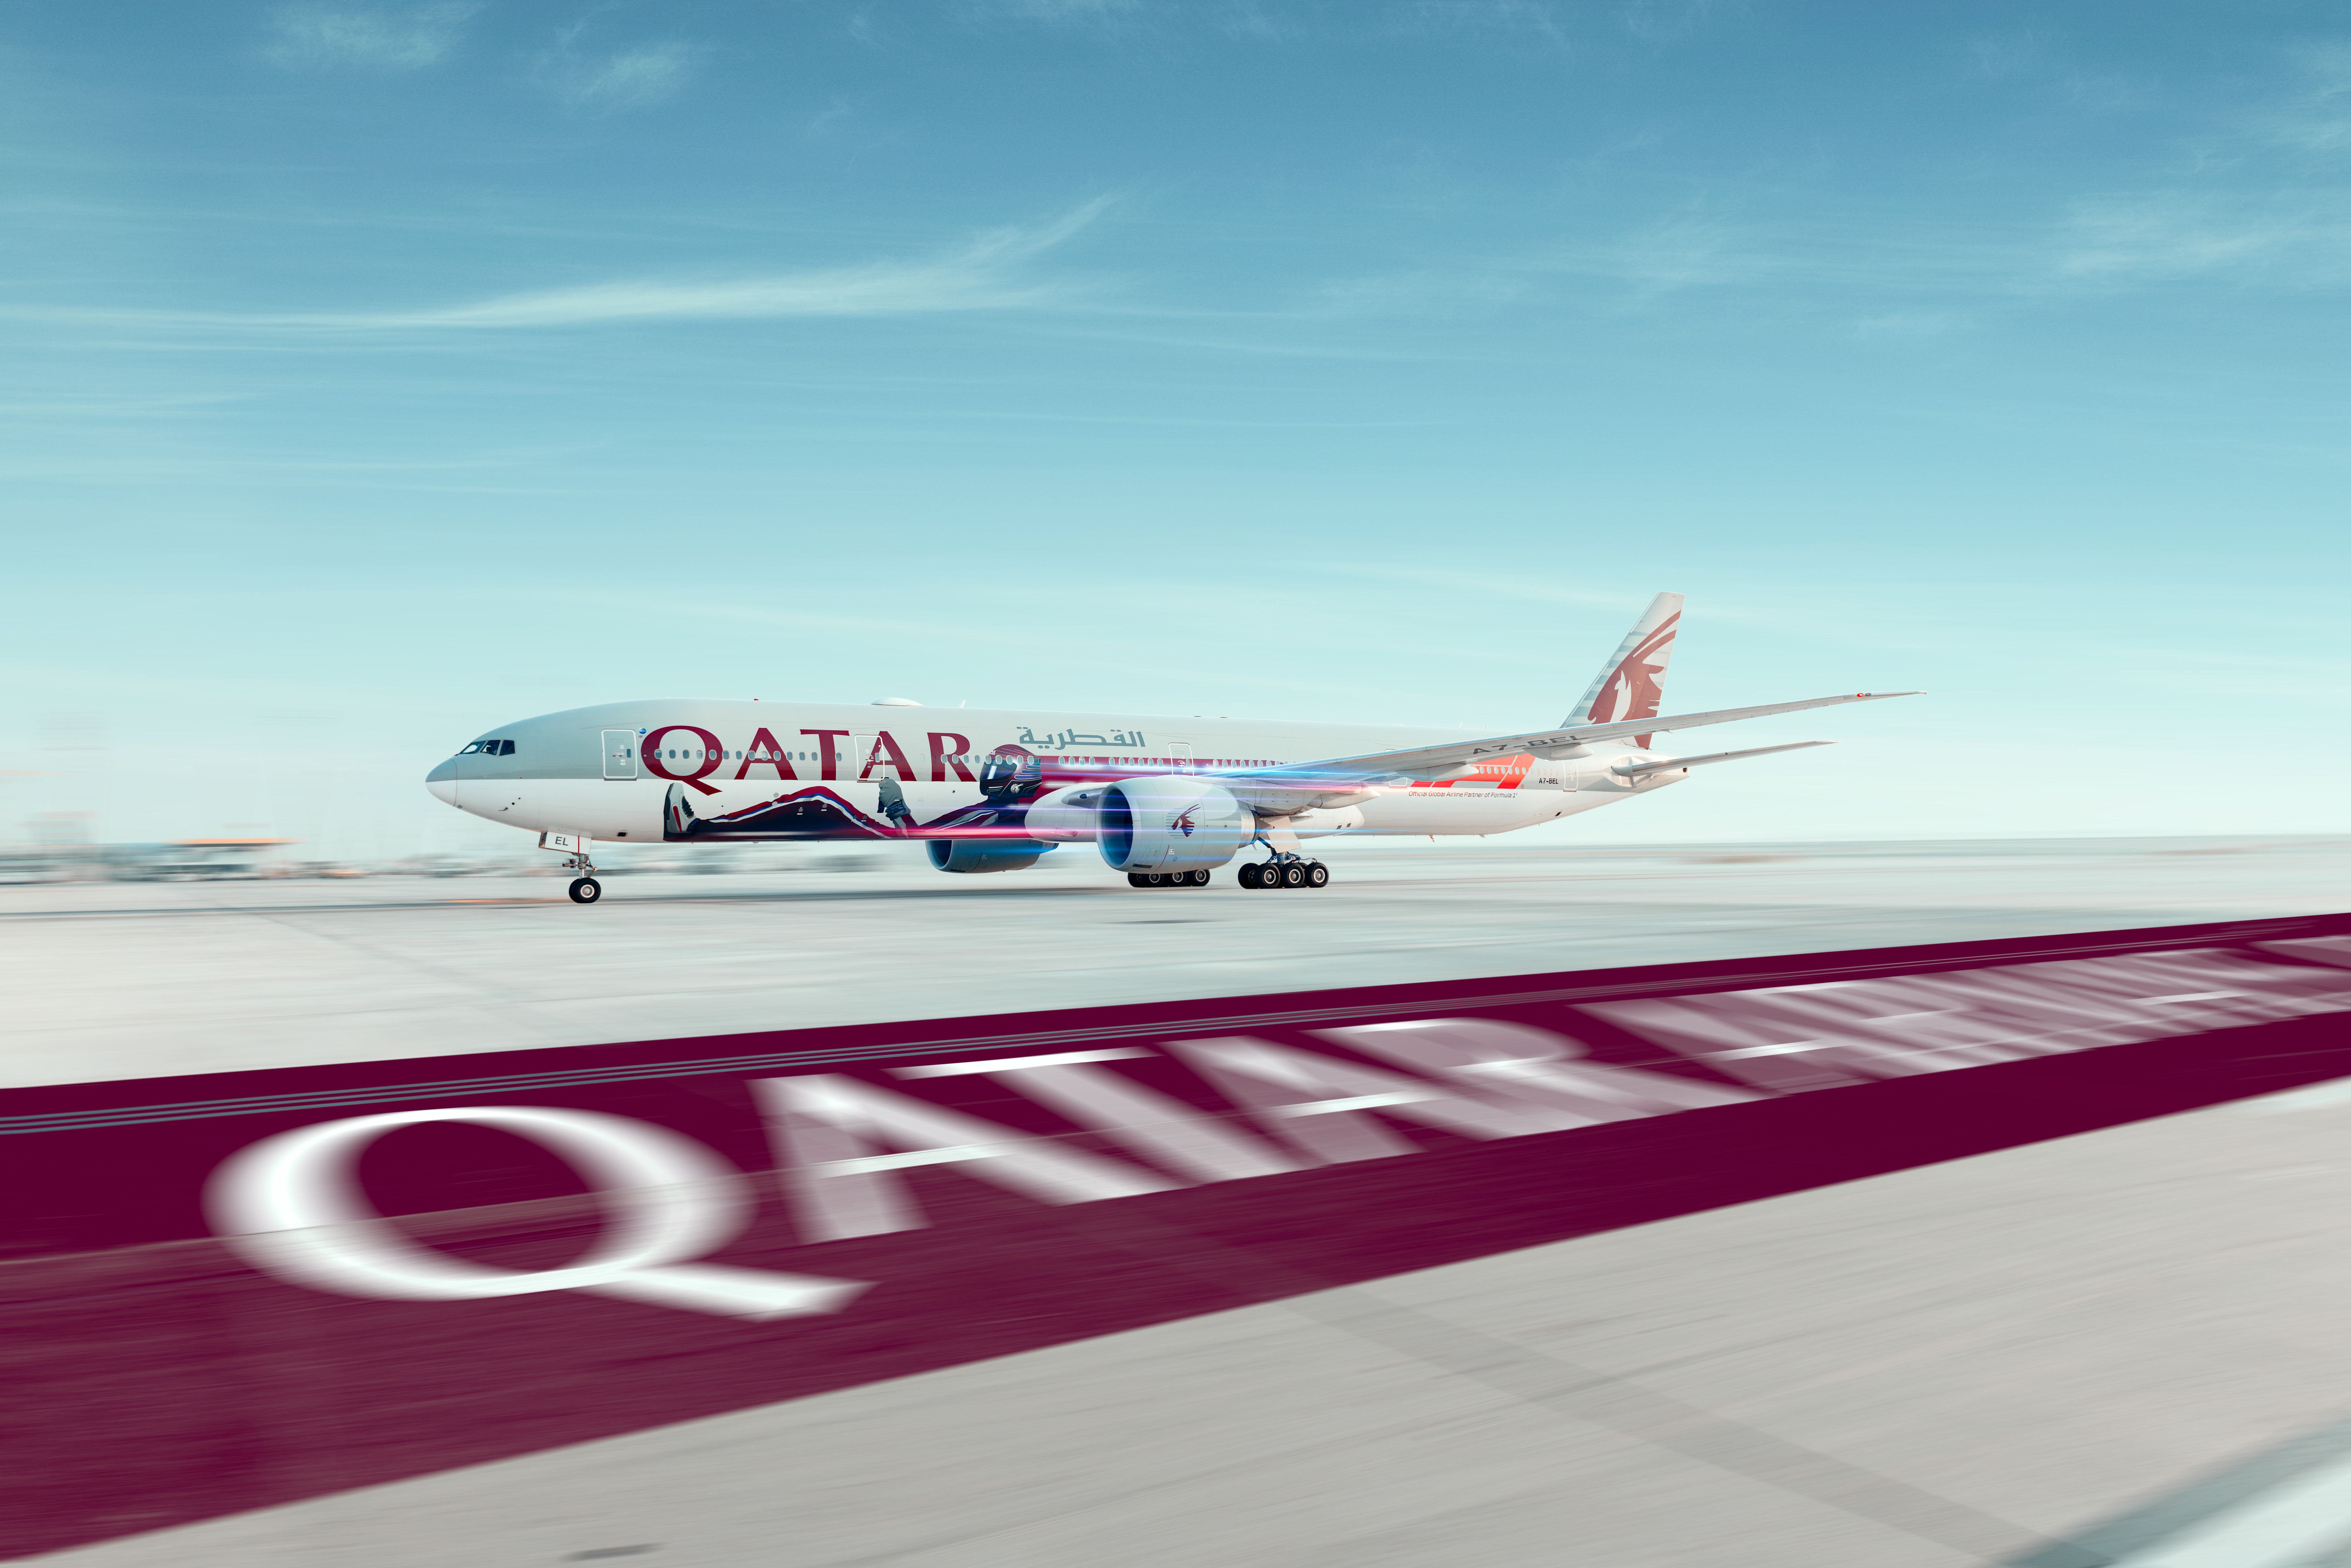 Qatar Airways F1 Livery